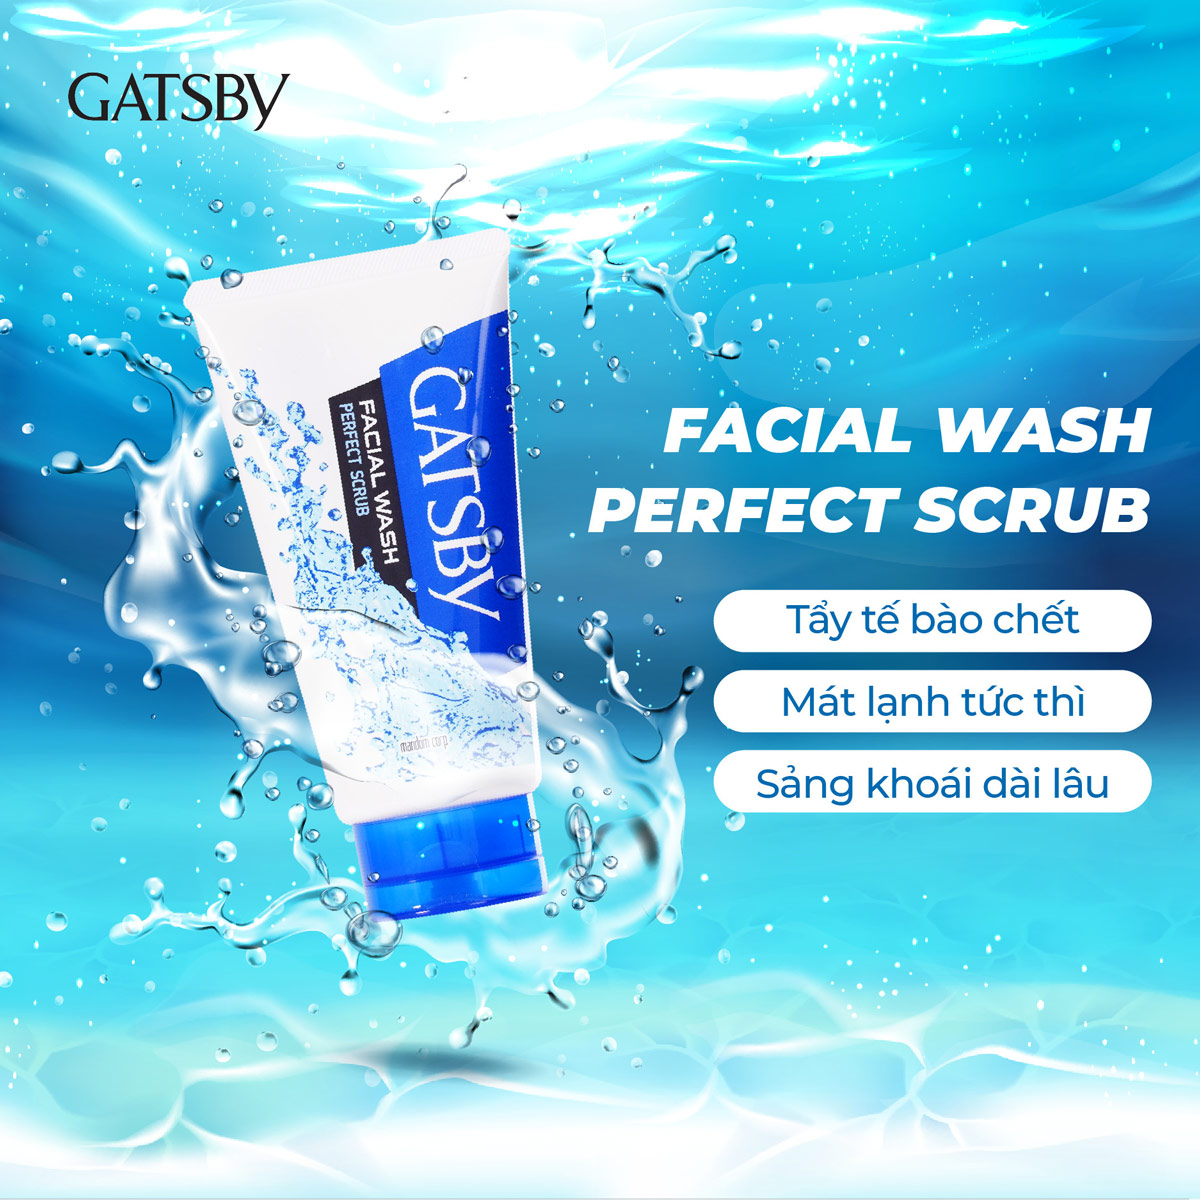 Sữa Rửa Mặt Dạng Hạt GATSBY Facial Wash Perfect Scrub 130g